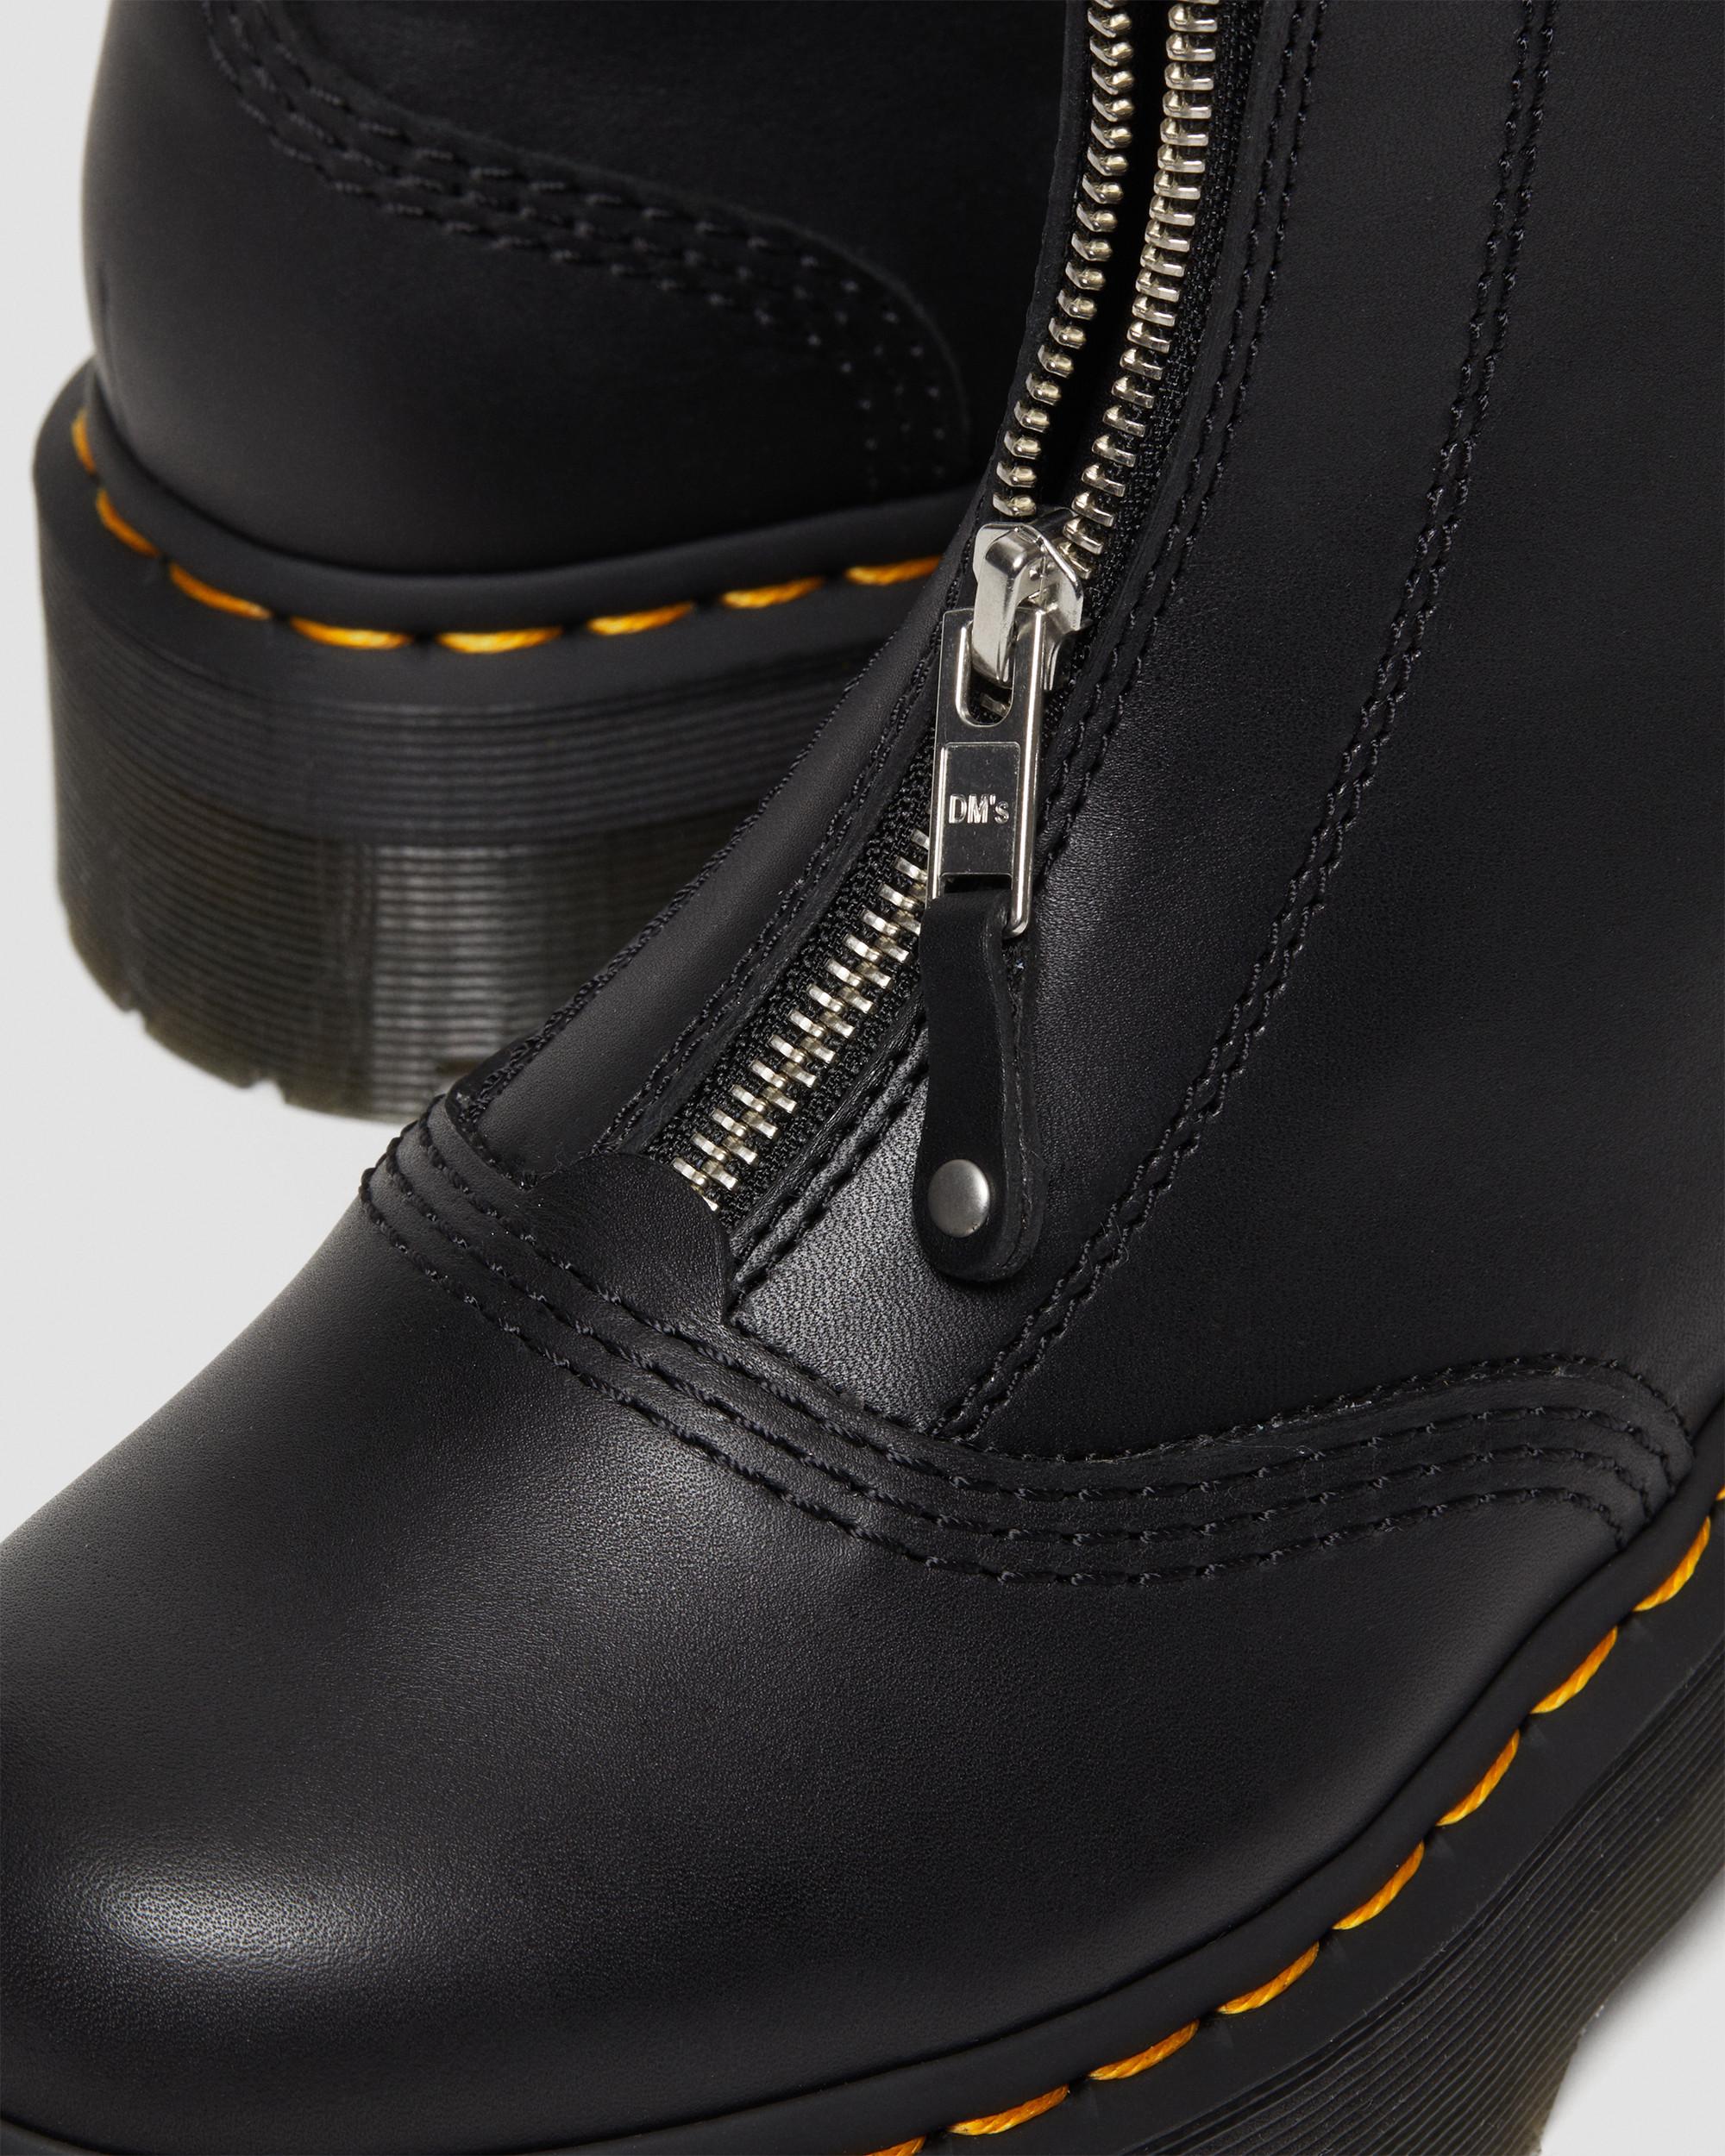 Jetta Sendal Leather Boots | Martens